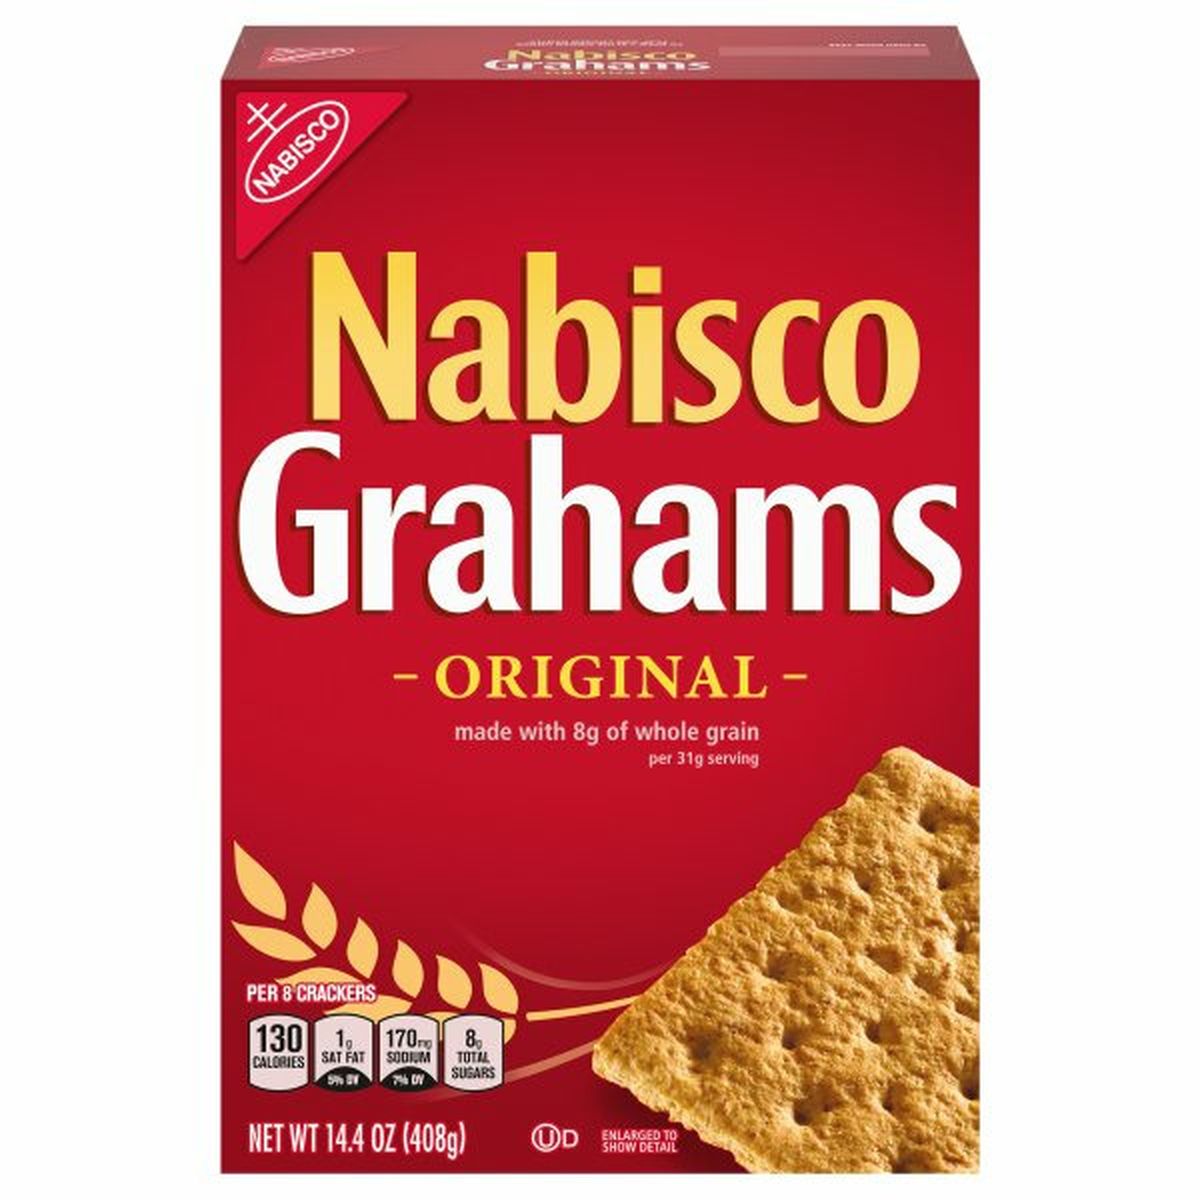 Calories in Nabisco Grahams, Original